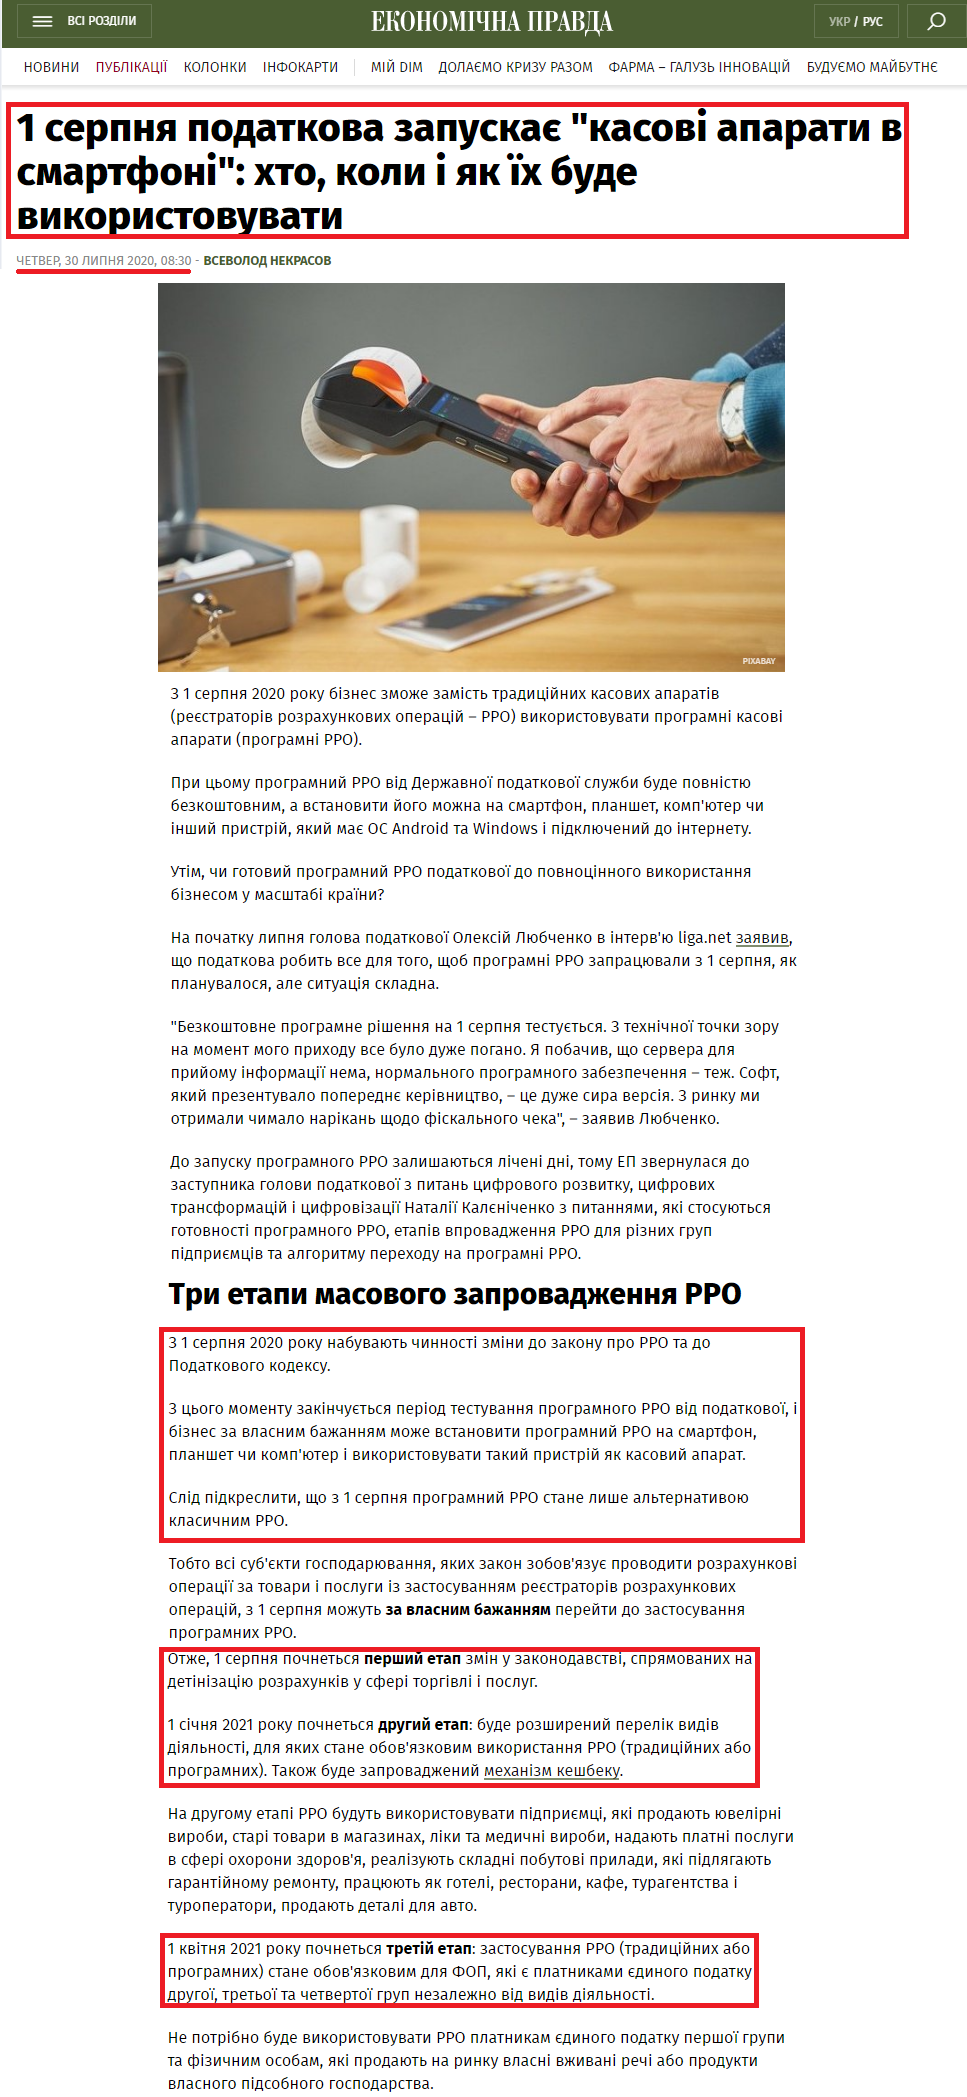 https://www.epravda.com.ua/publications/2020/07/30/663510/